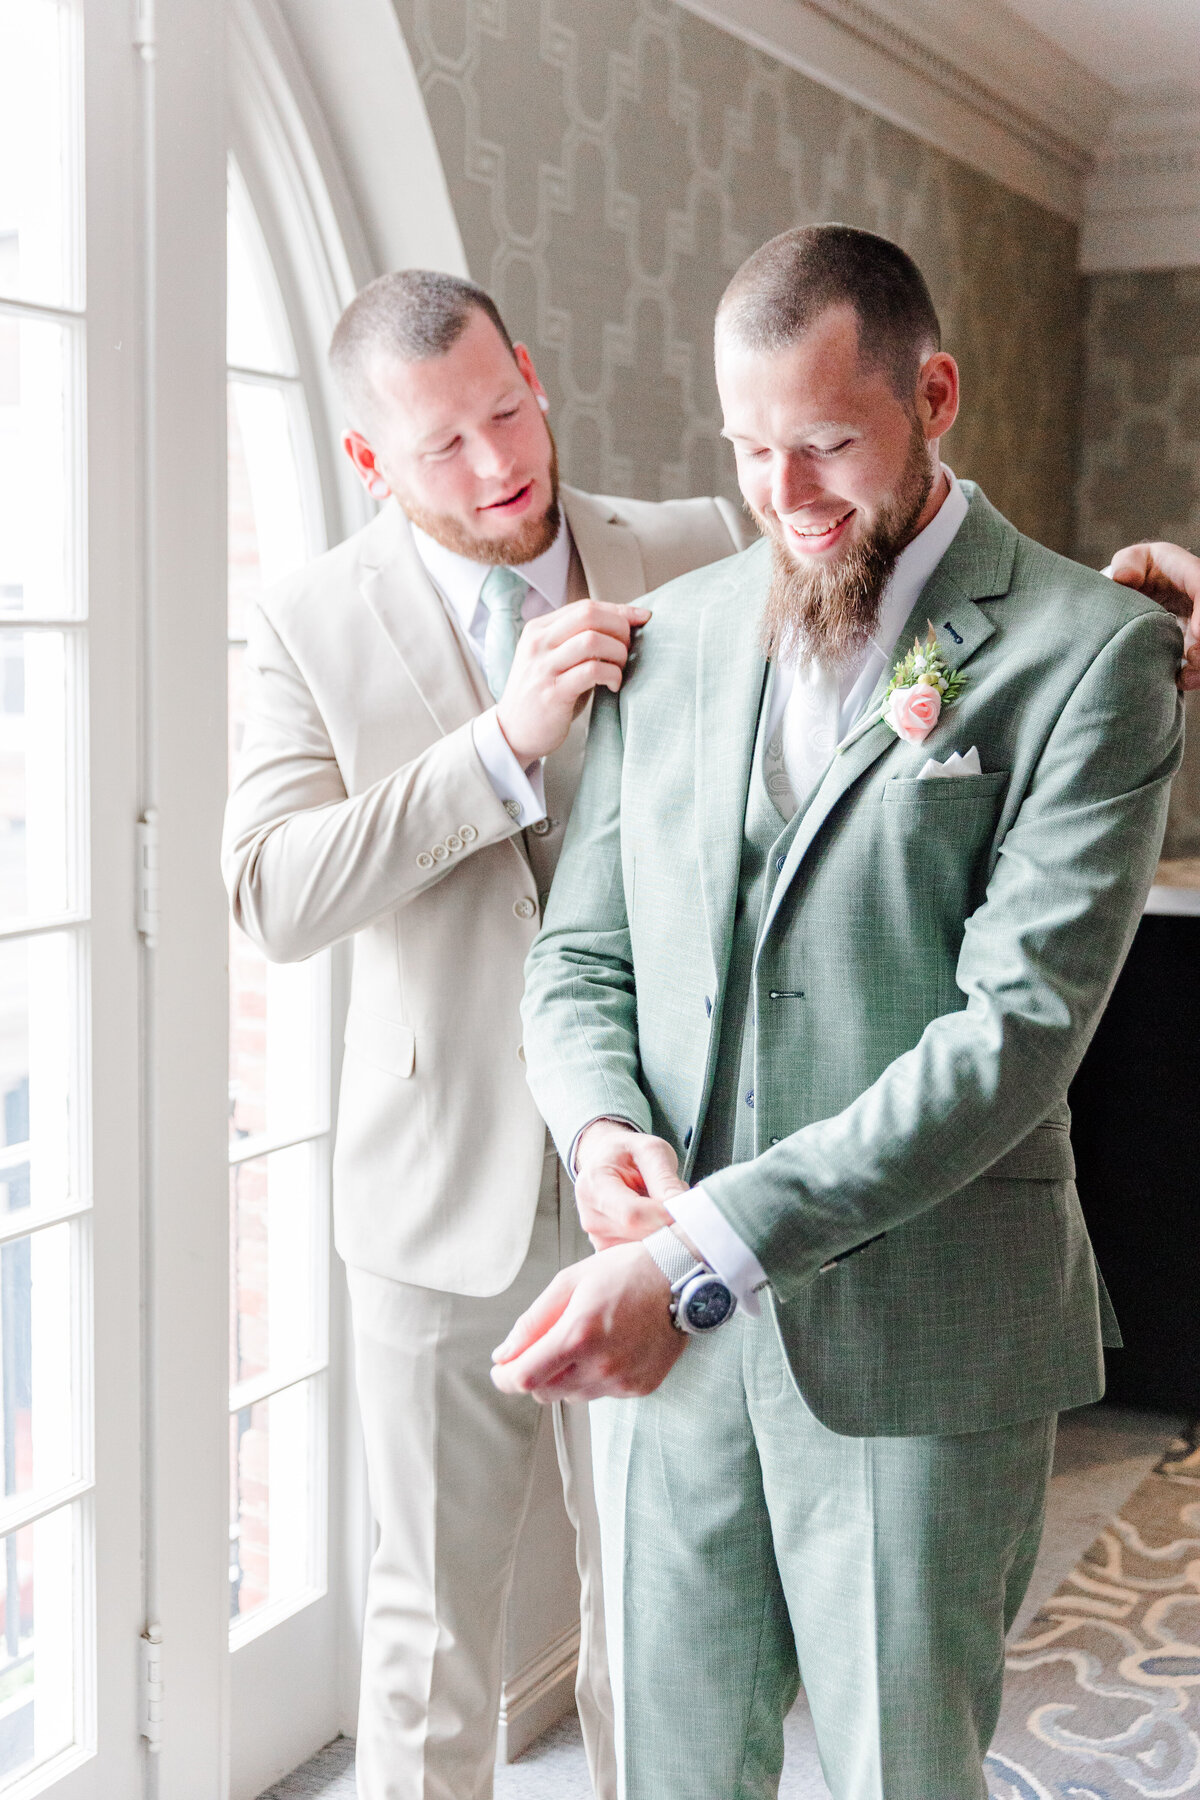 groomsman helping groom adjust his suit jacket